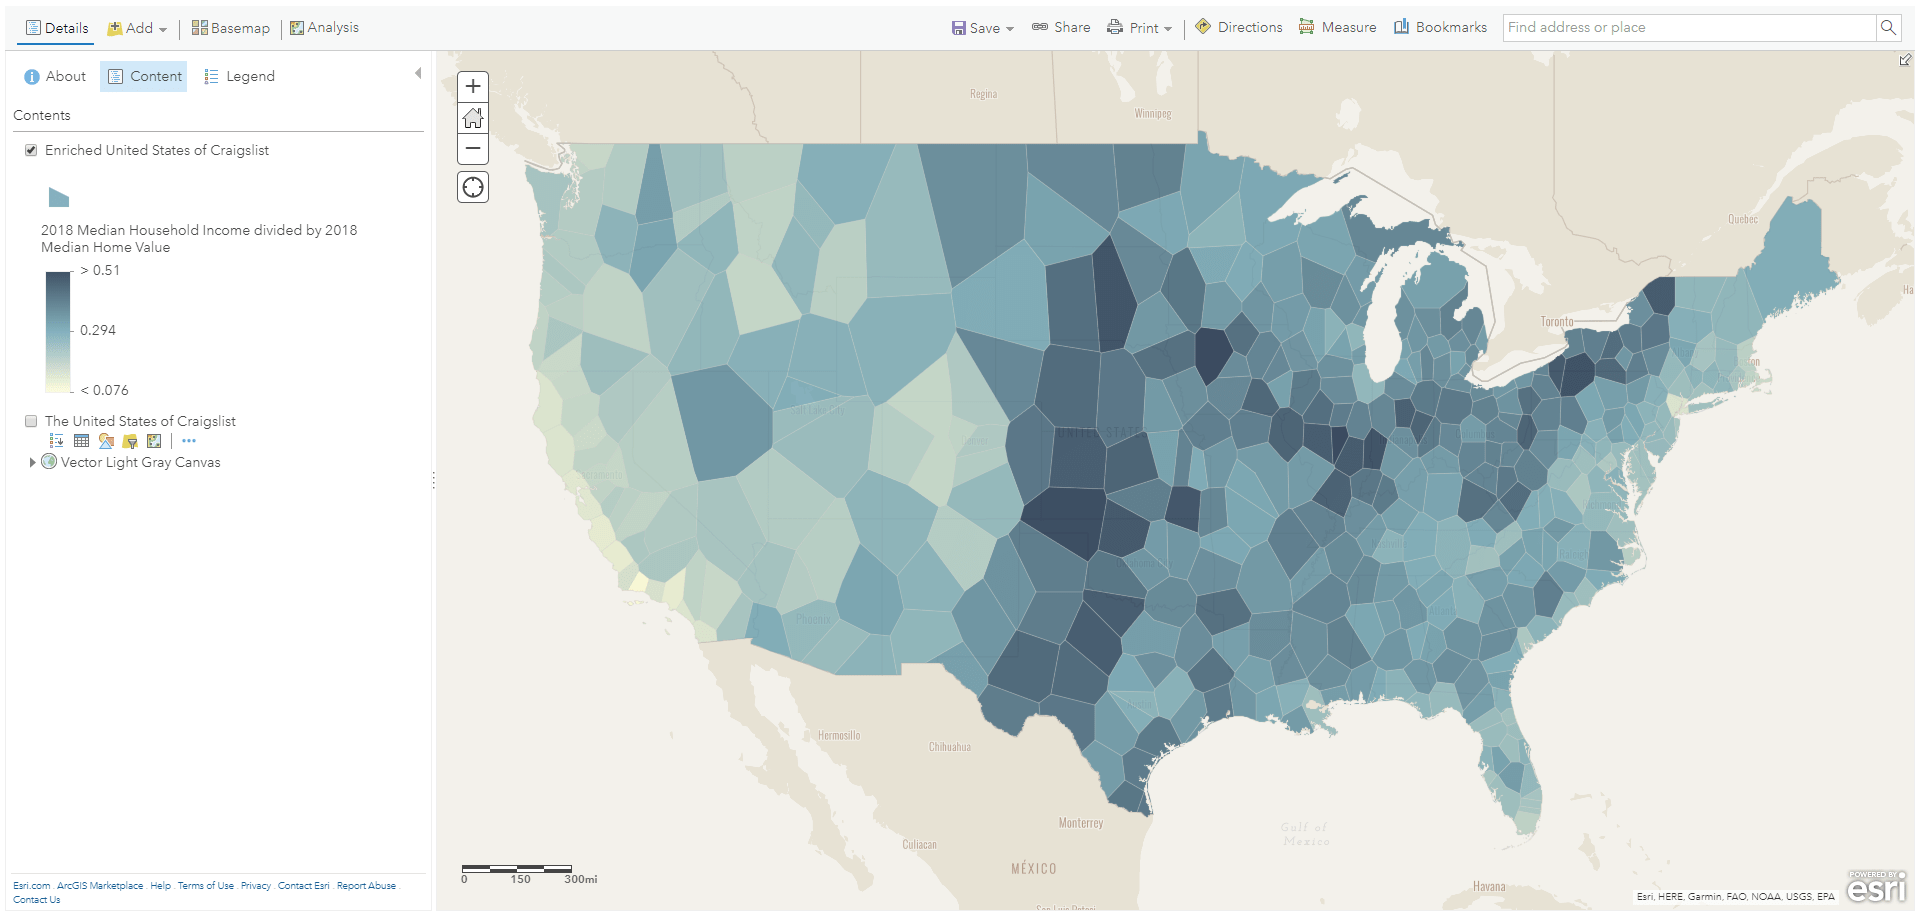 United States of Craigslist, with Demographics